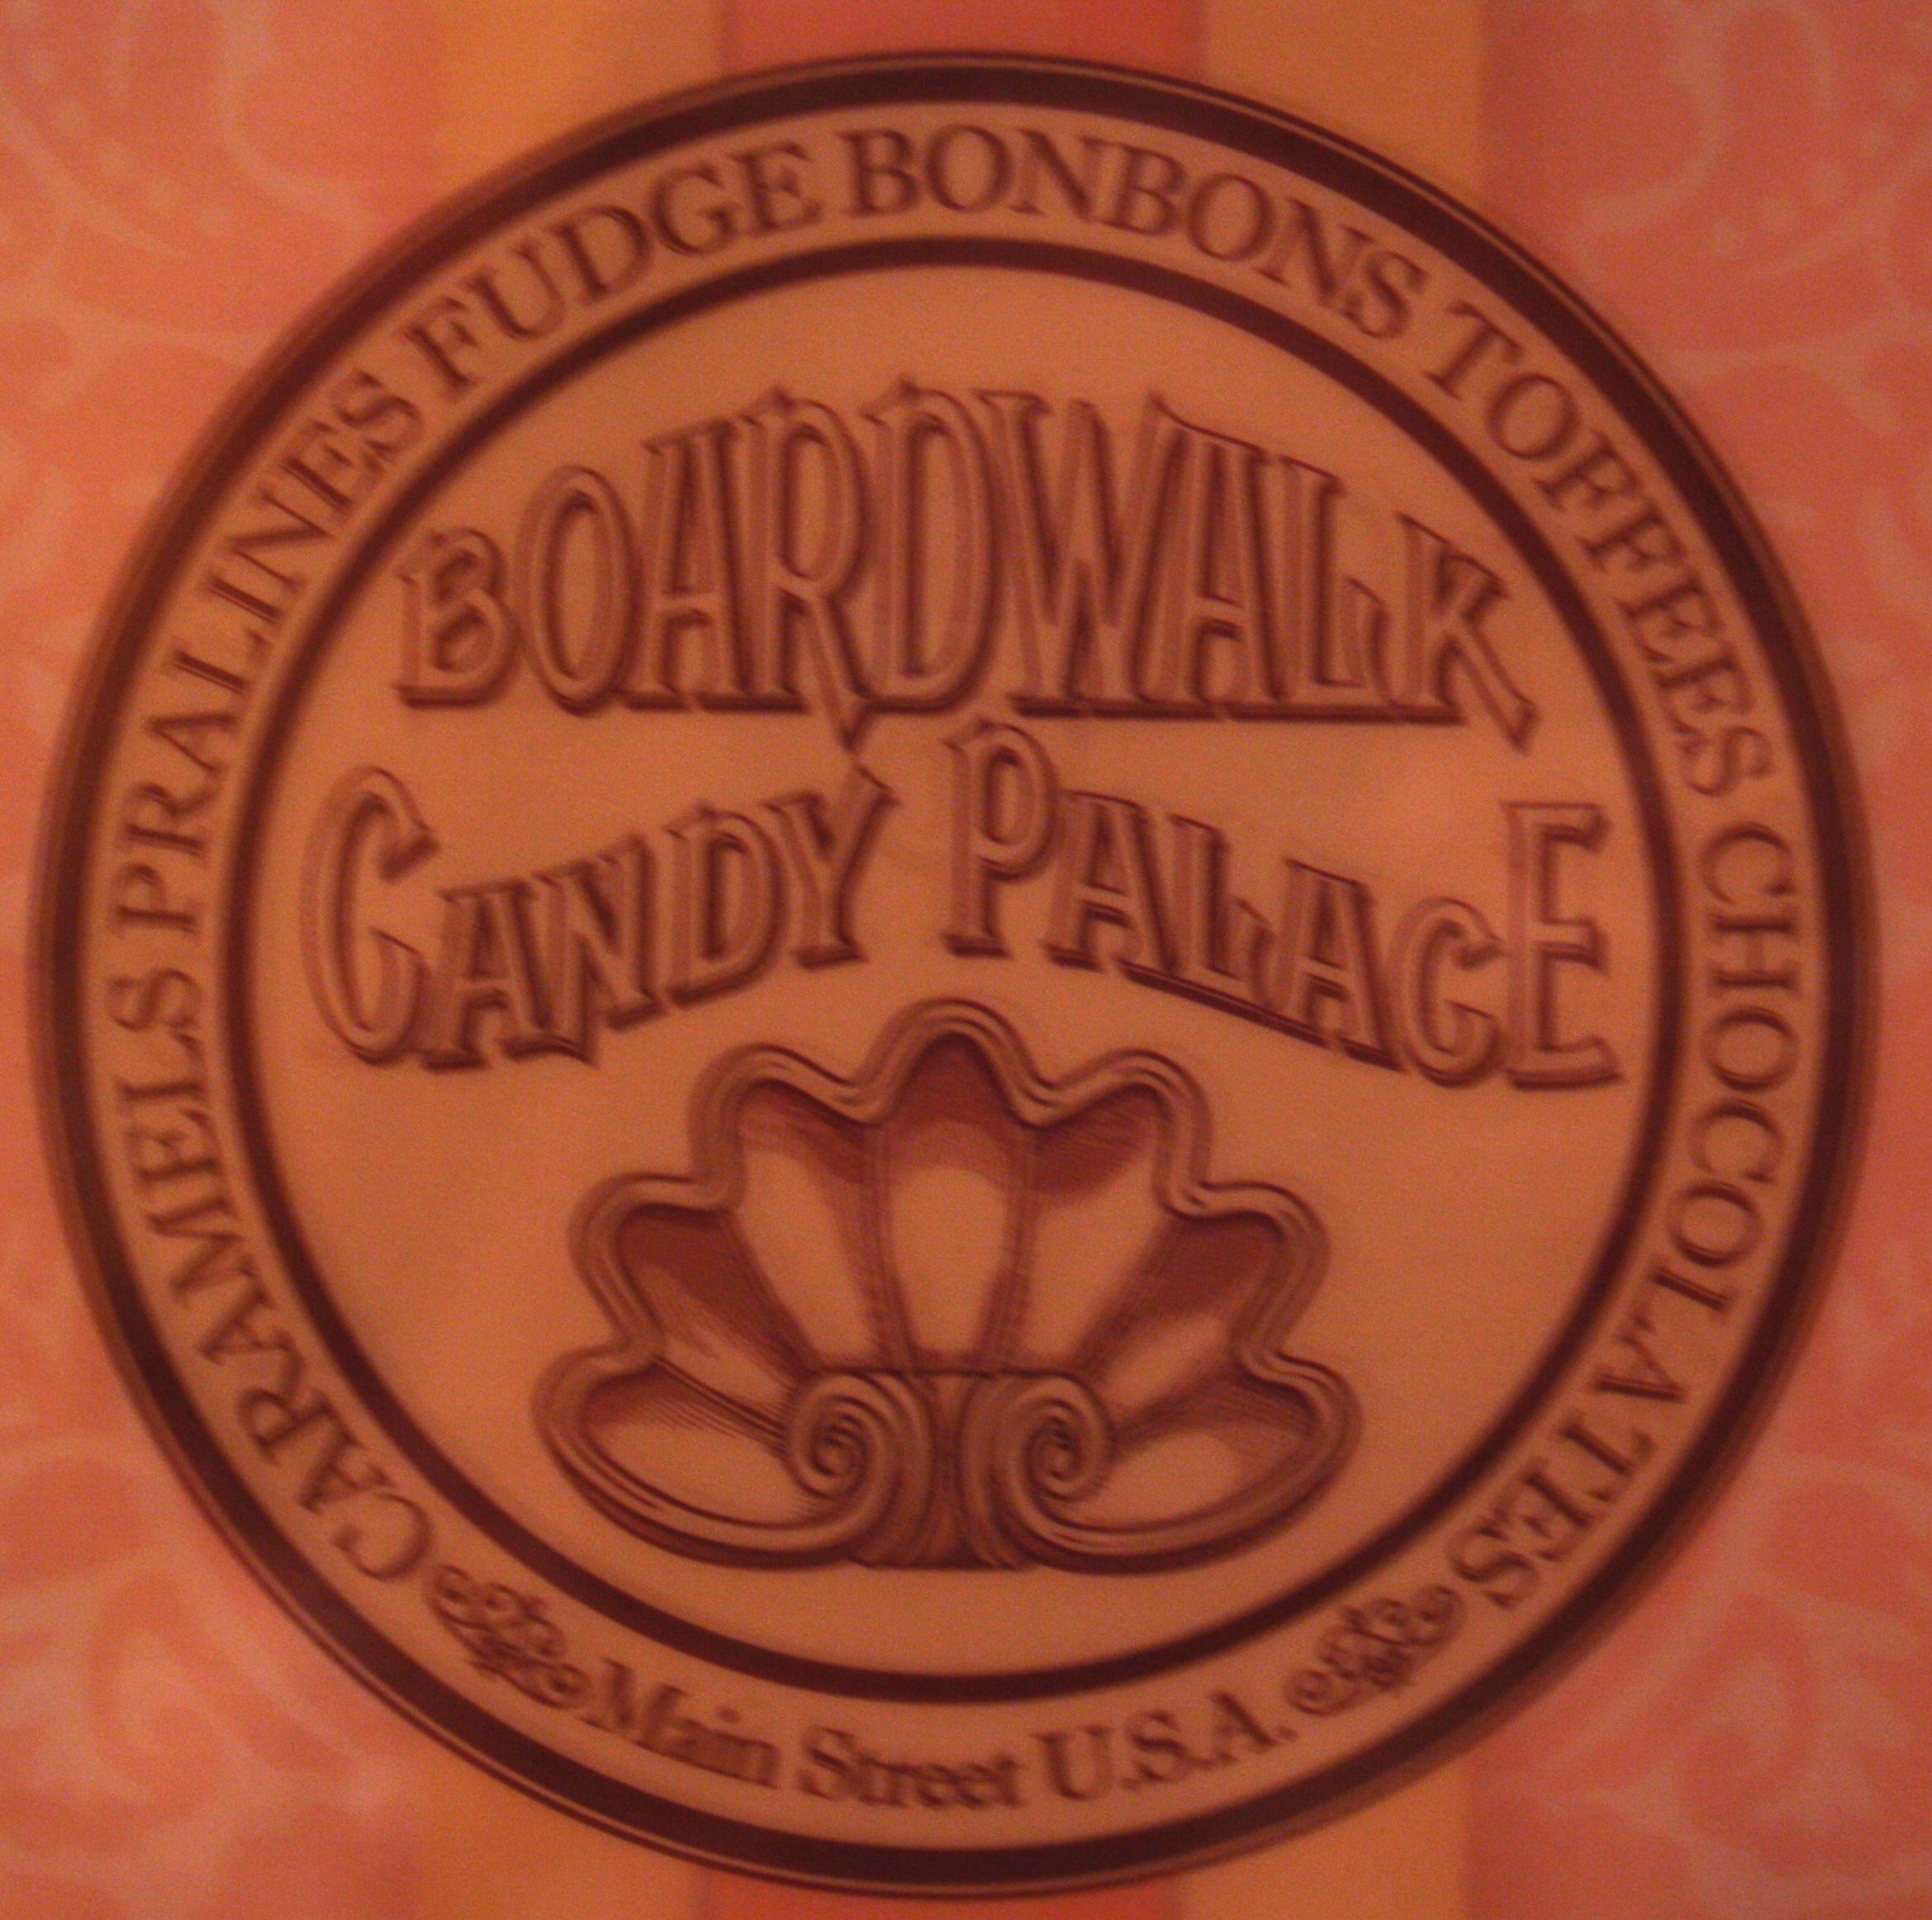 Candy Palace Logo - Boardwalk Candy Palace, Disneyland Paris – PARCE QUE J'ADORE CRITIQUER